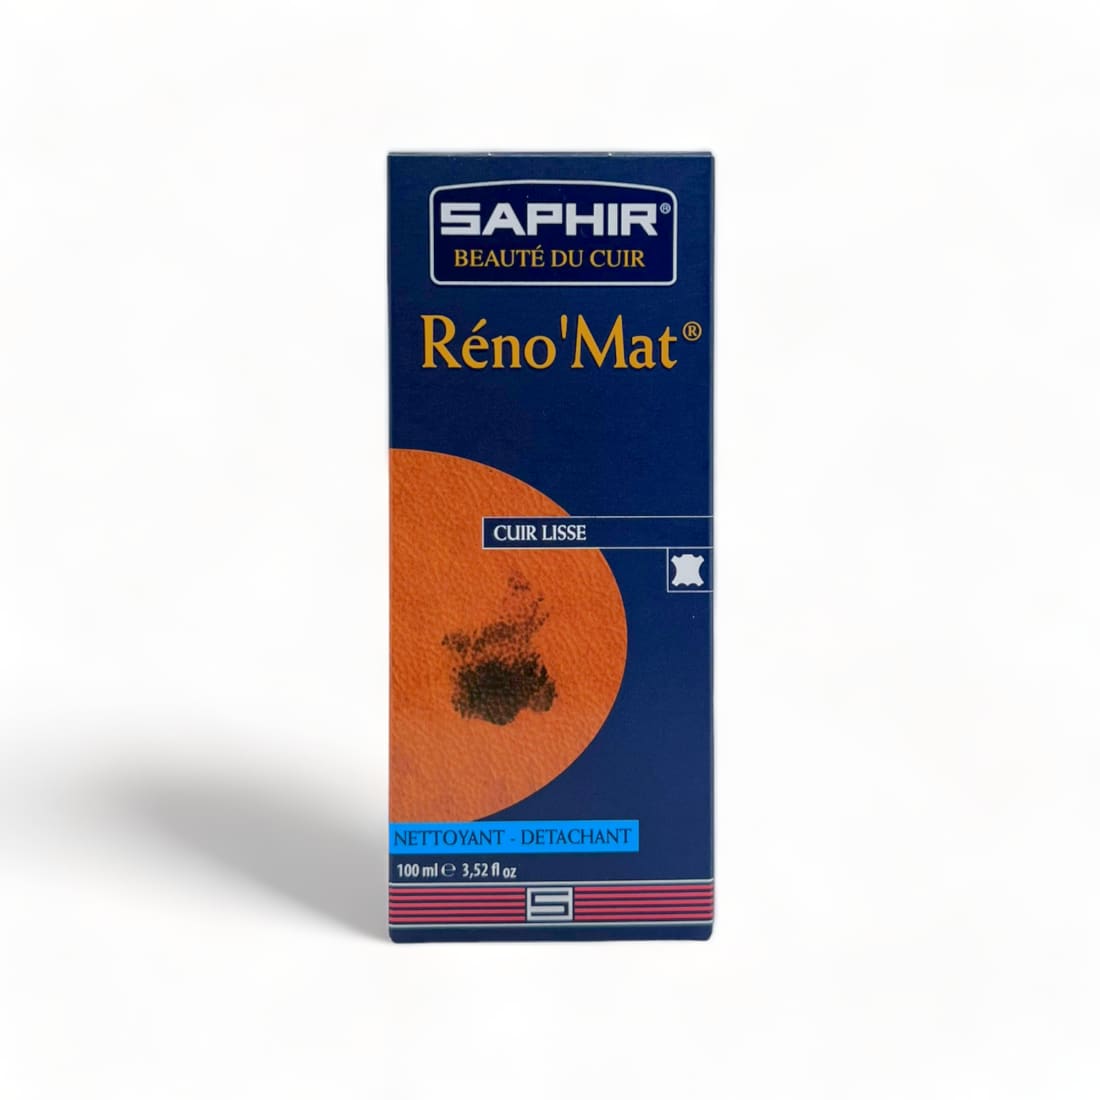 Reno mat. Saphir Reno mat. Очиститель реномат сапфир. Очиститель для кожи Saphir.